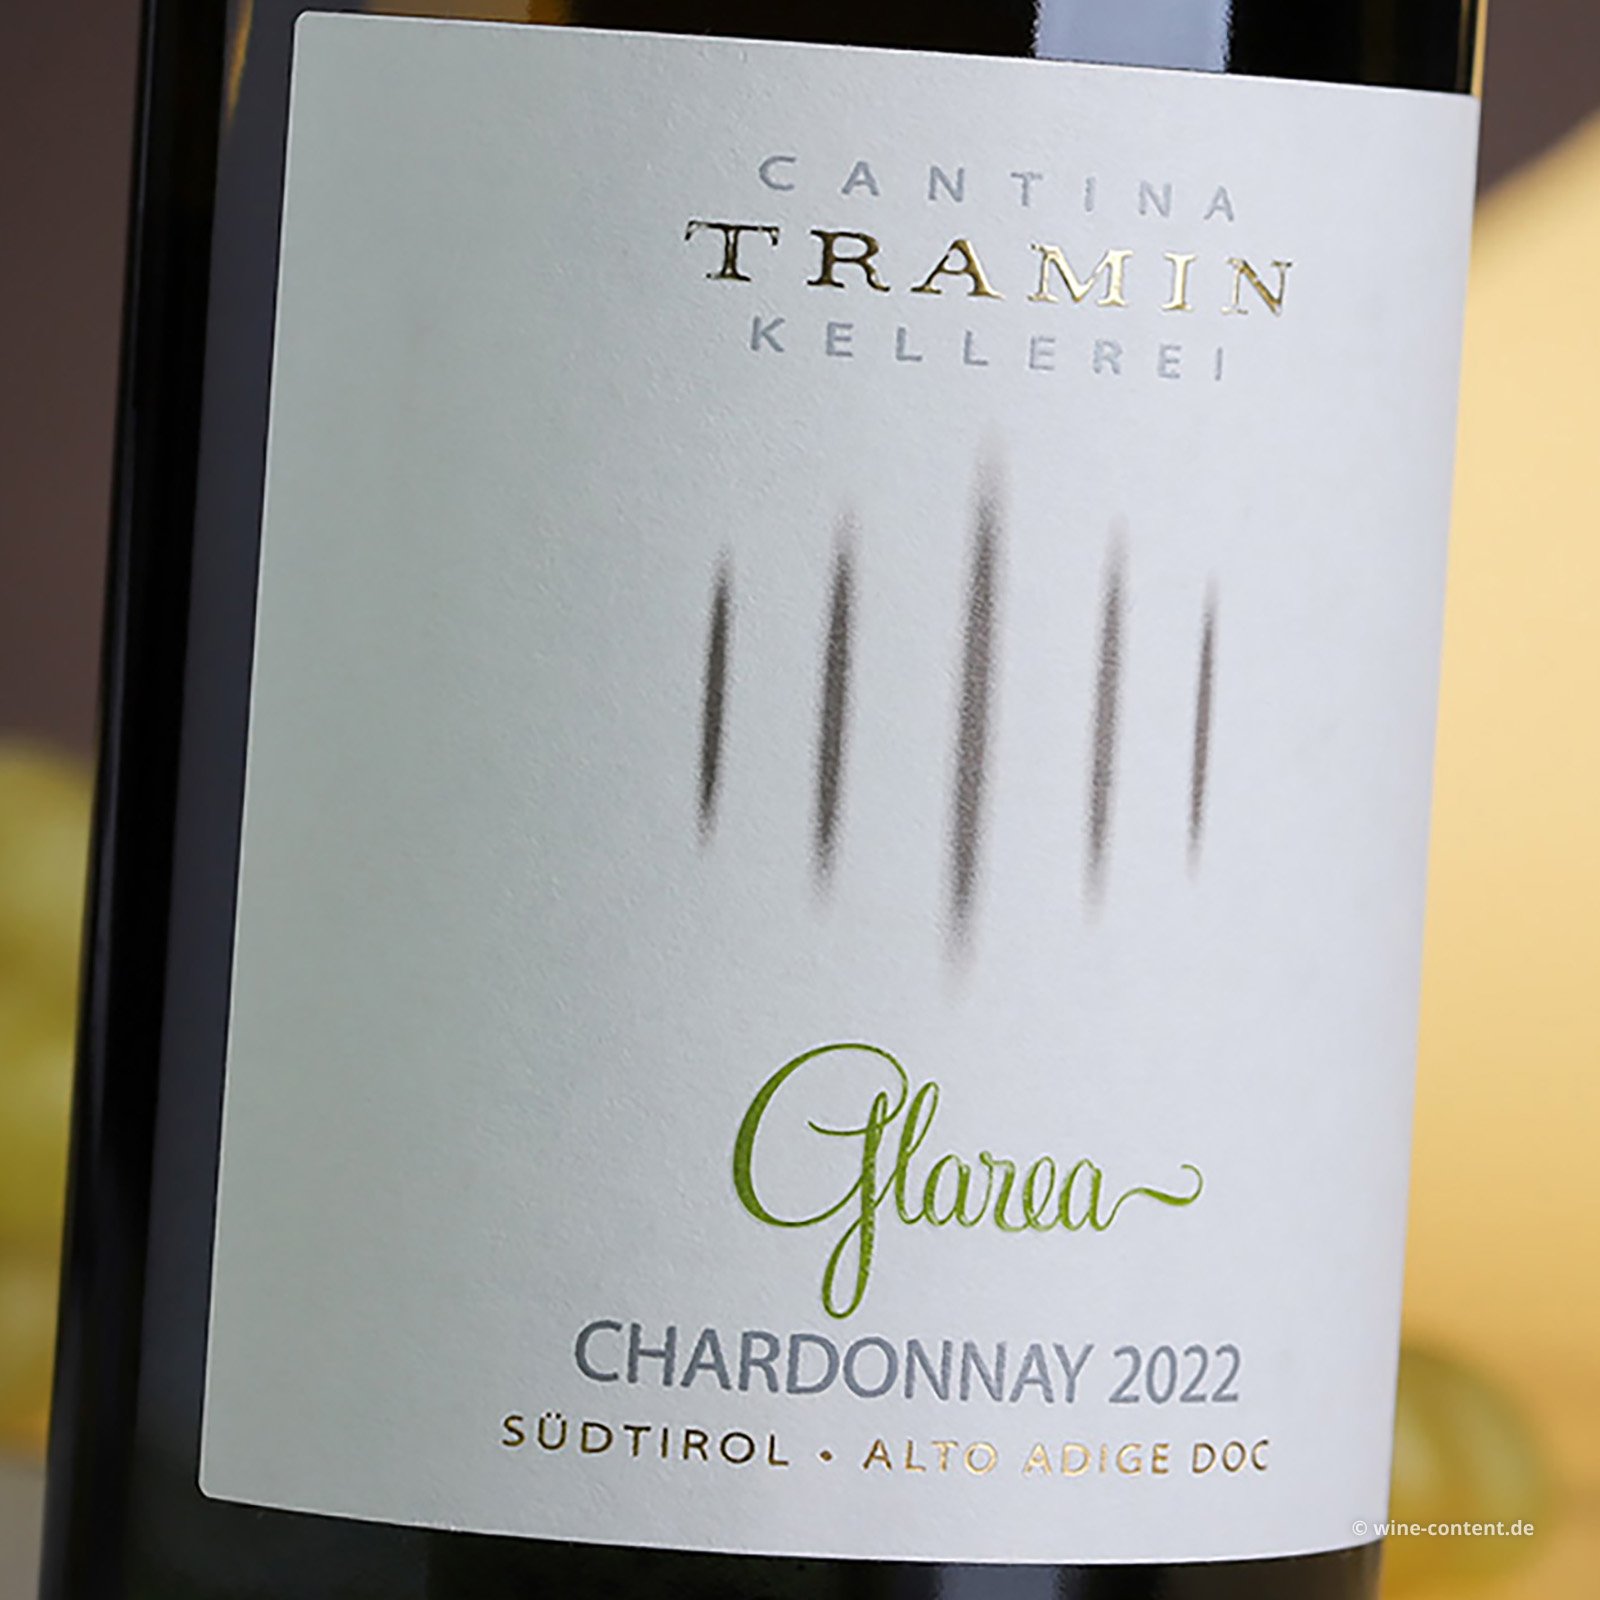 Chardonnay 2022 Glarea